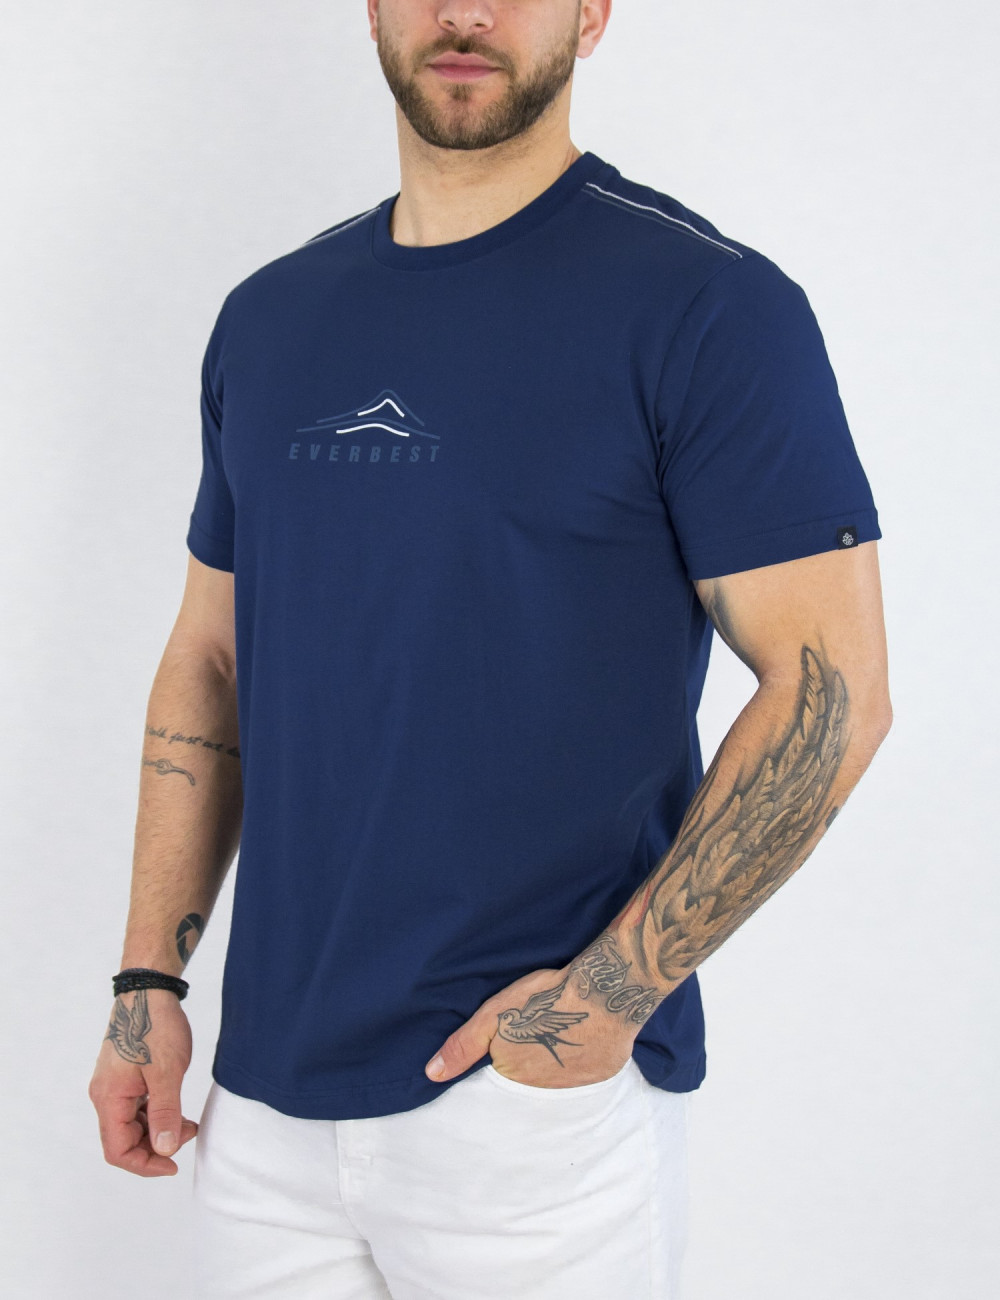 Everbest ανδρικό μπλε Plus Size Tshirt με τύπωμα 232810